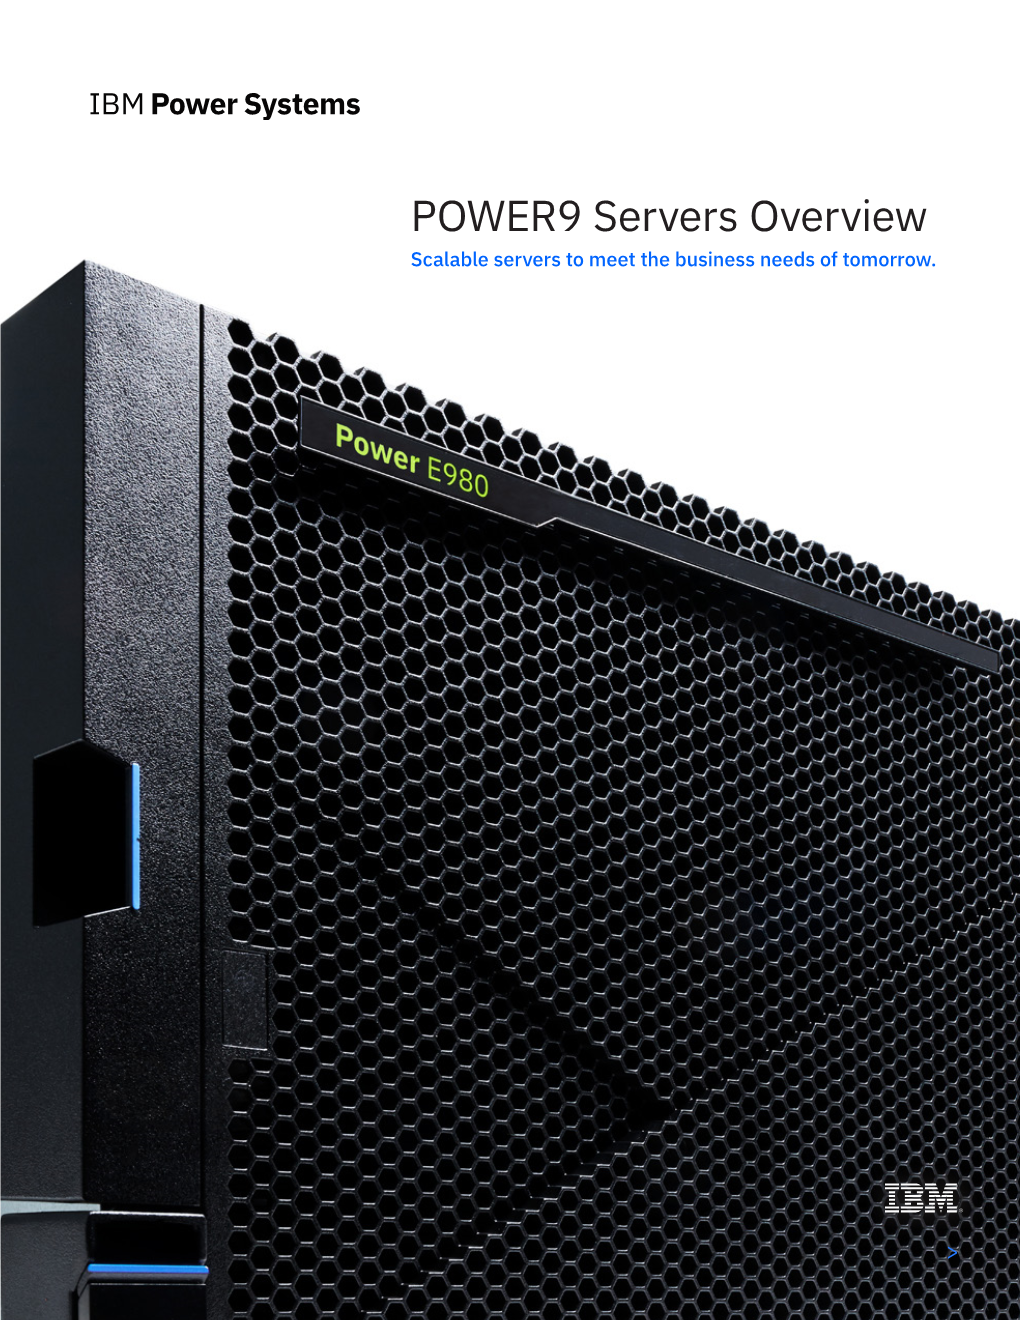 IBM POWER9 Servers Overview